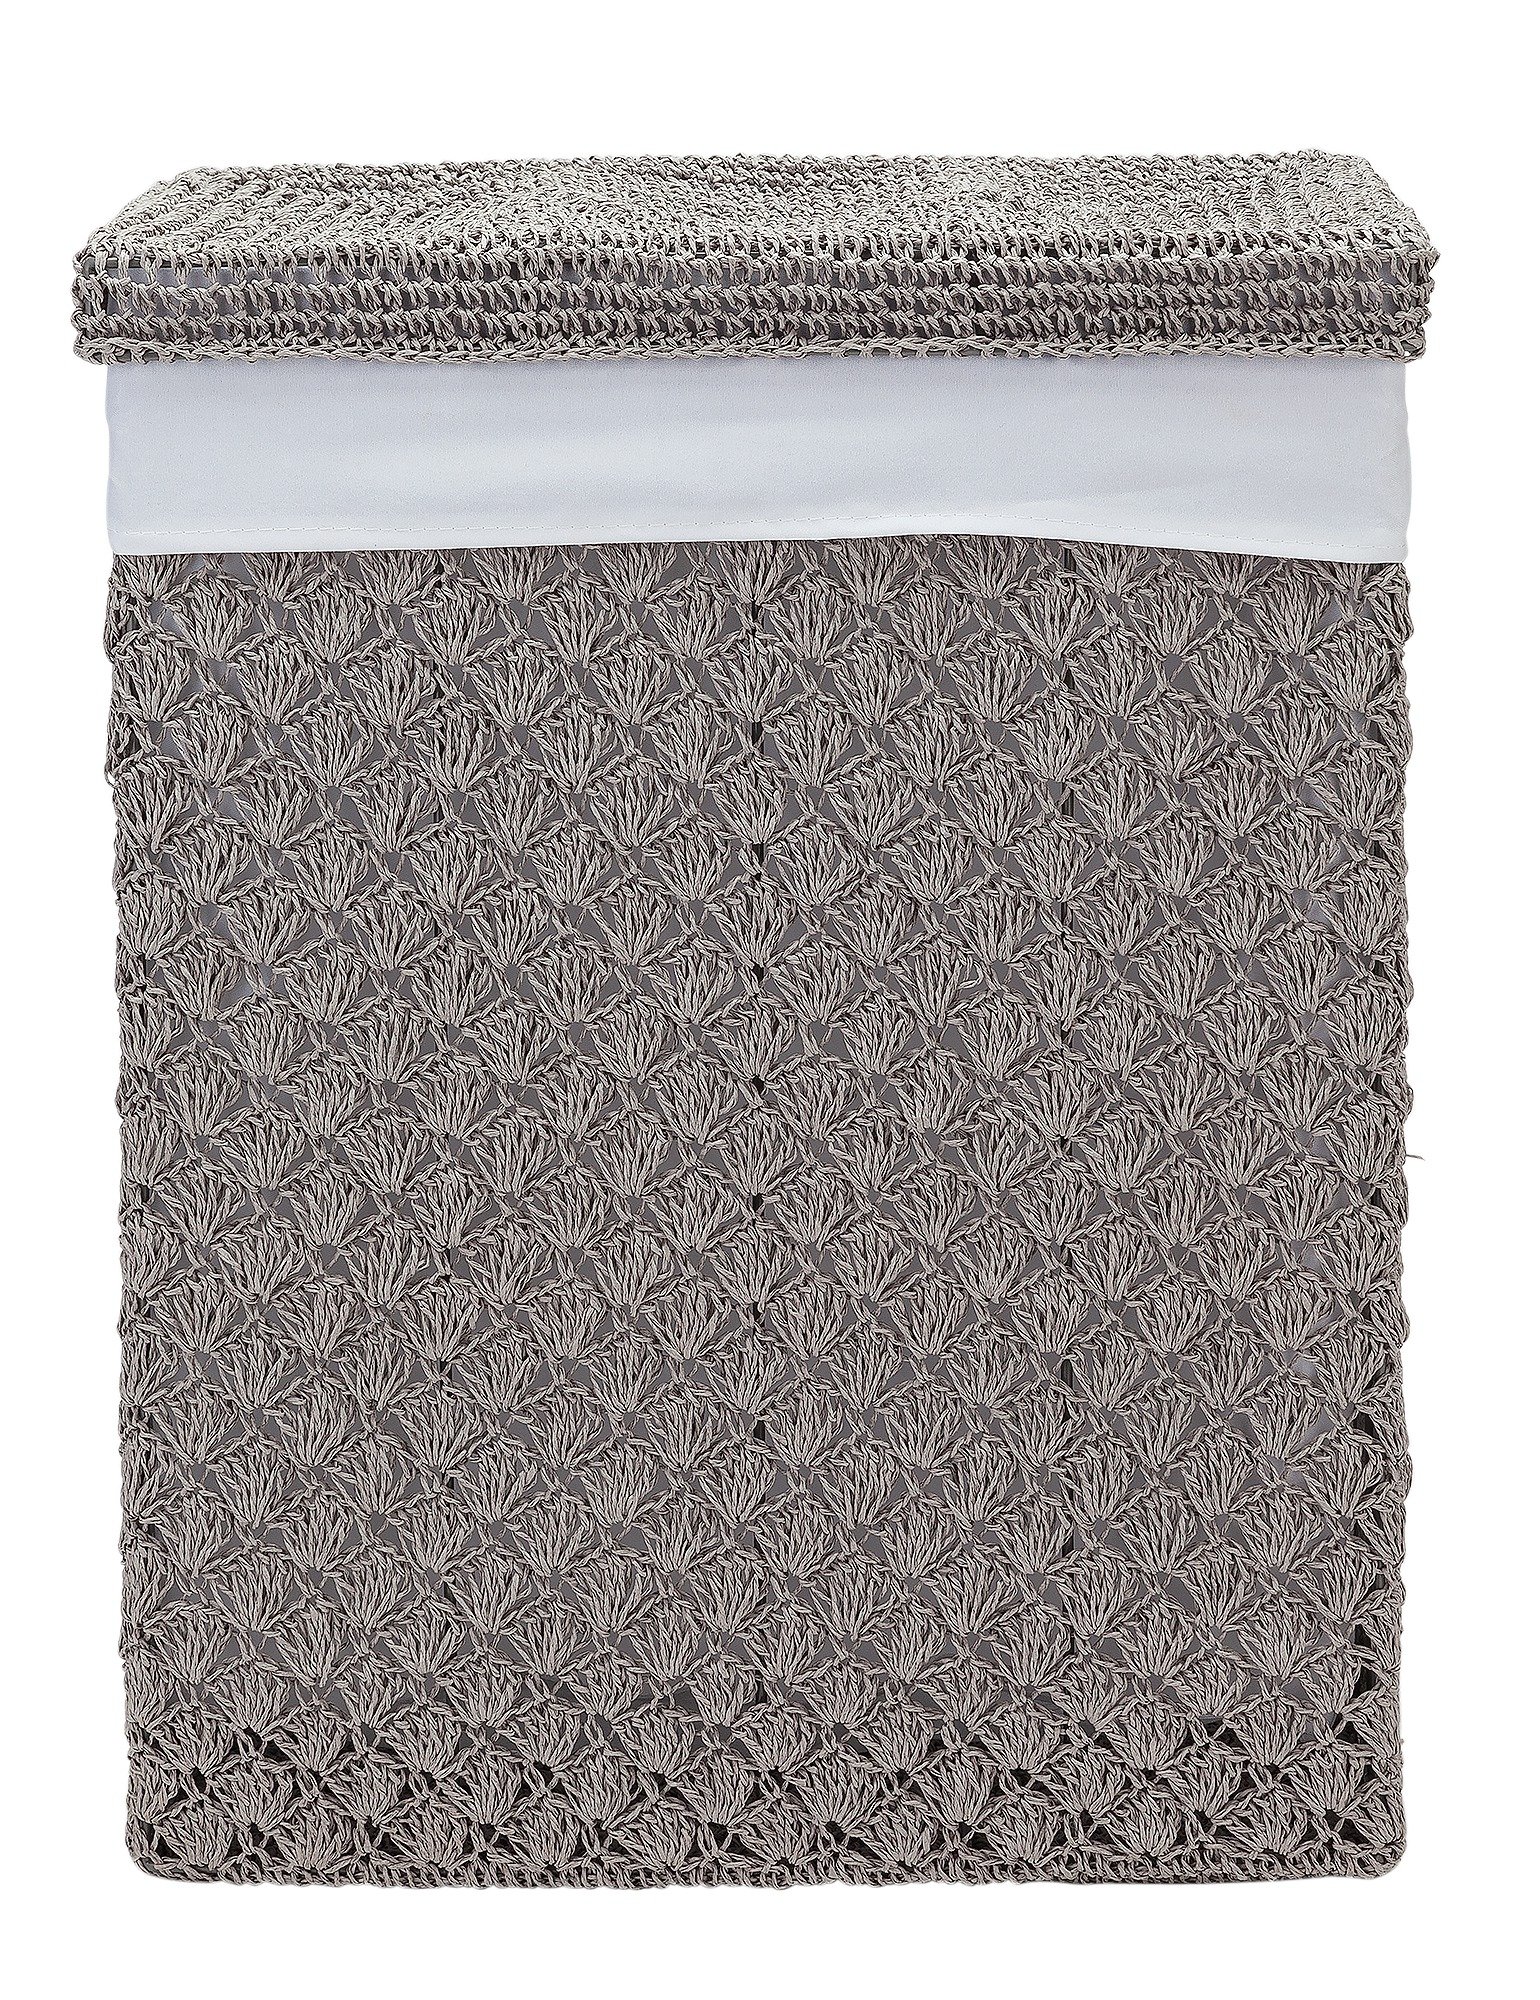 Argos Home 70 Litre Crochet Laundry Bin - Grey